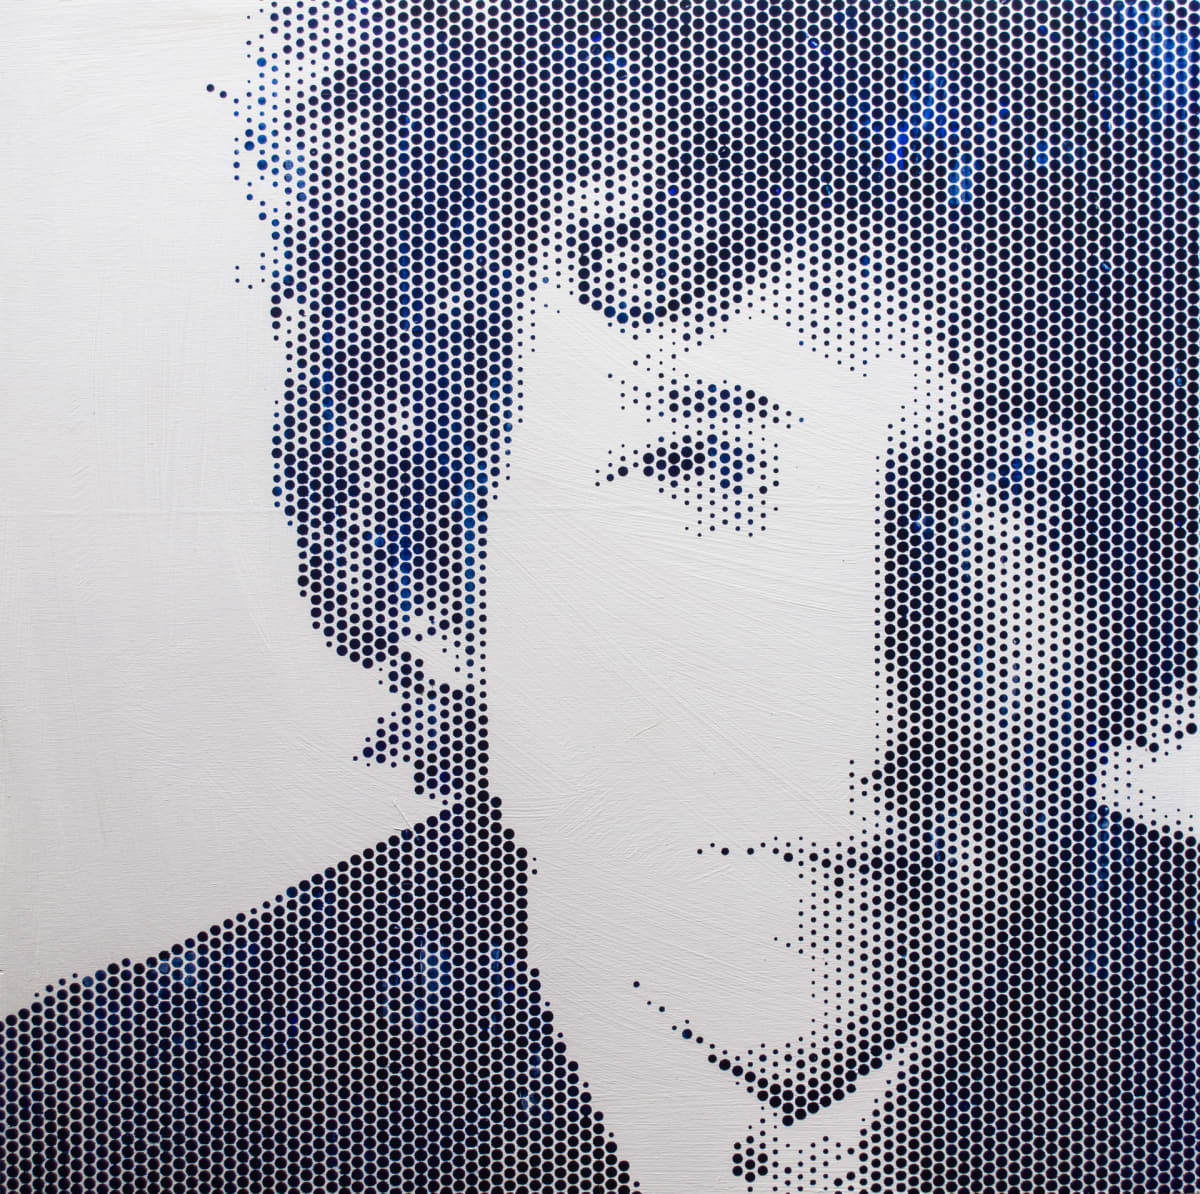 Bob Dylan III by Sean Christopher Ward 